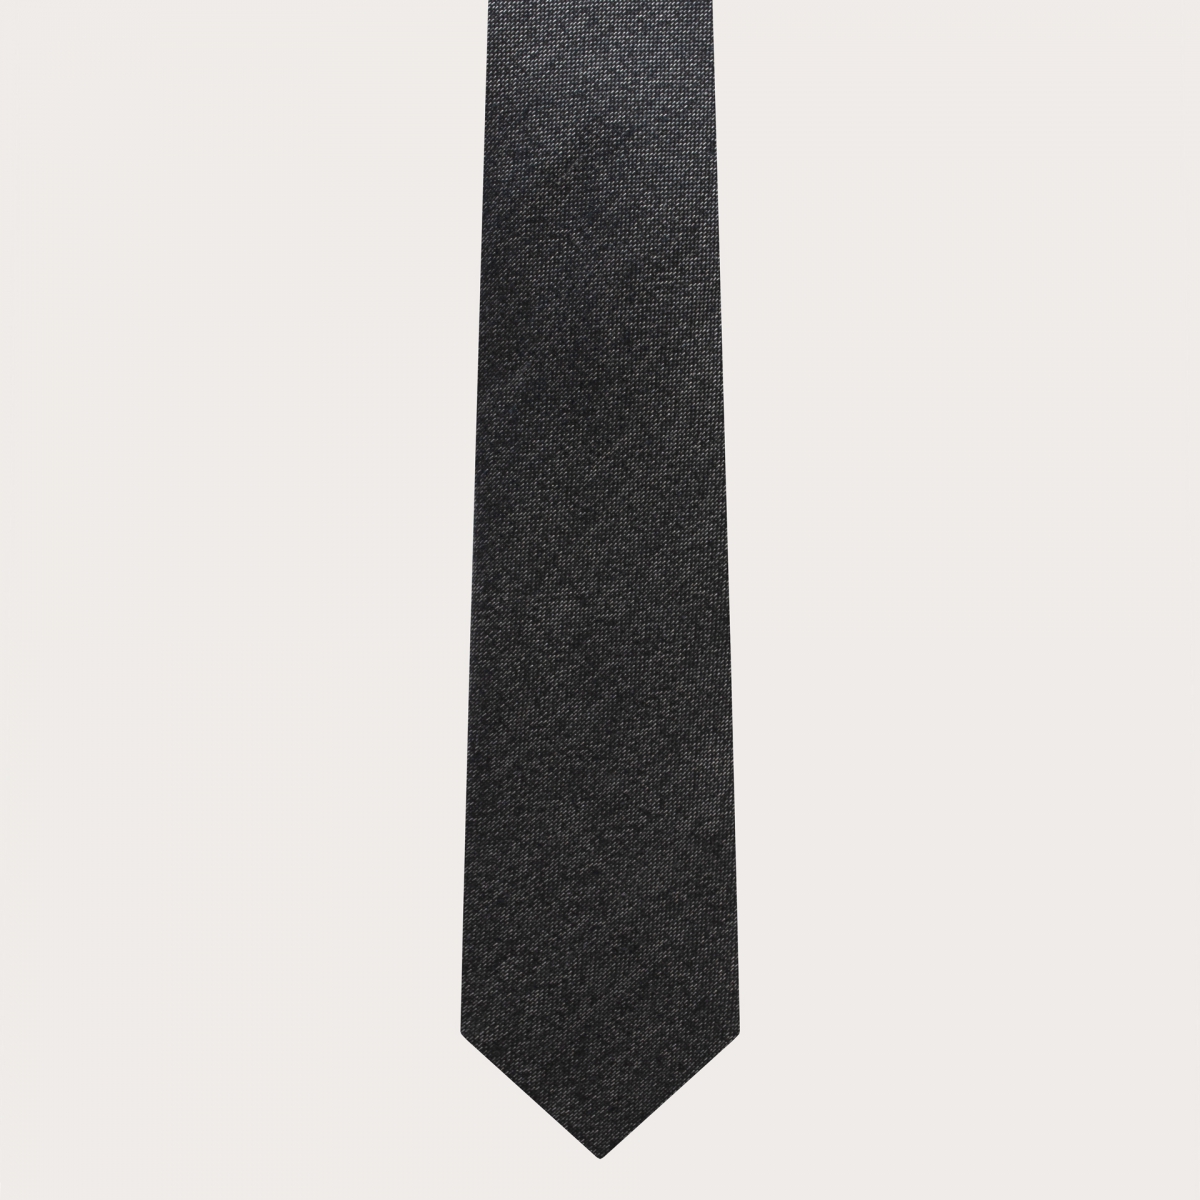 BRUCLE Refined men's set of suspenders, tie and pocket square in melange grey silk